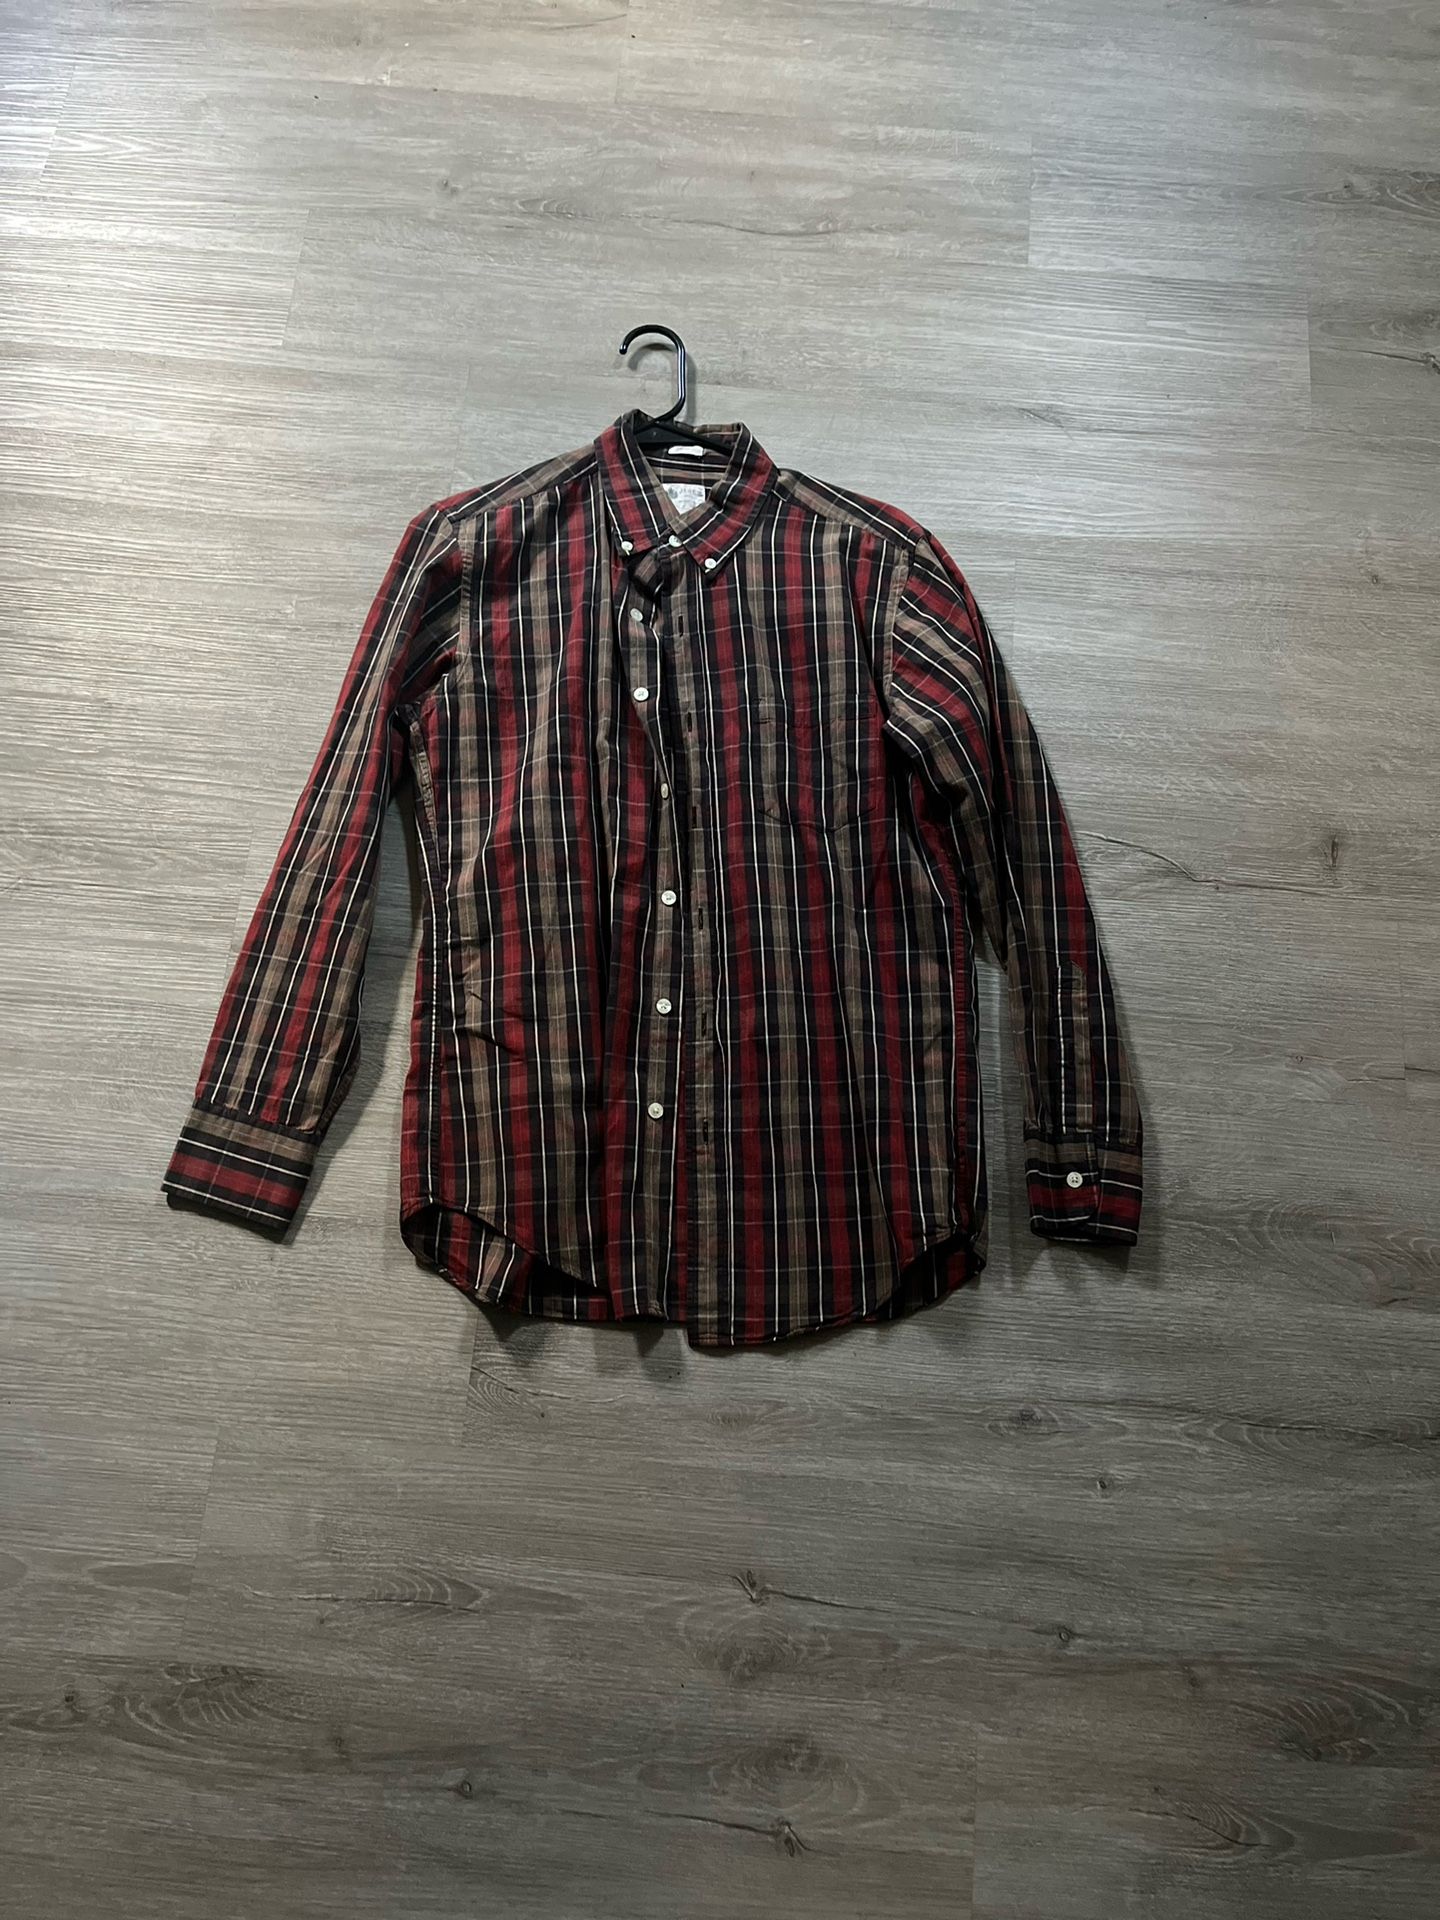 $18 JCrew Men’s Size Small Plaid Shirt Cranberry,Black, Tan, Brown 100% Cotton 